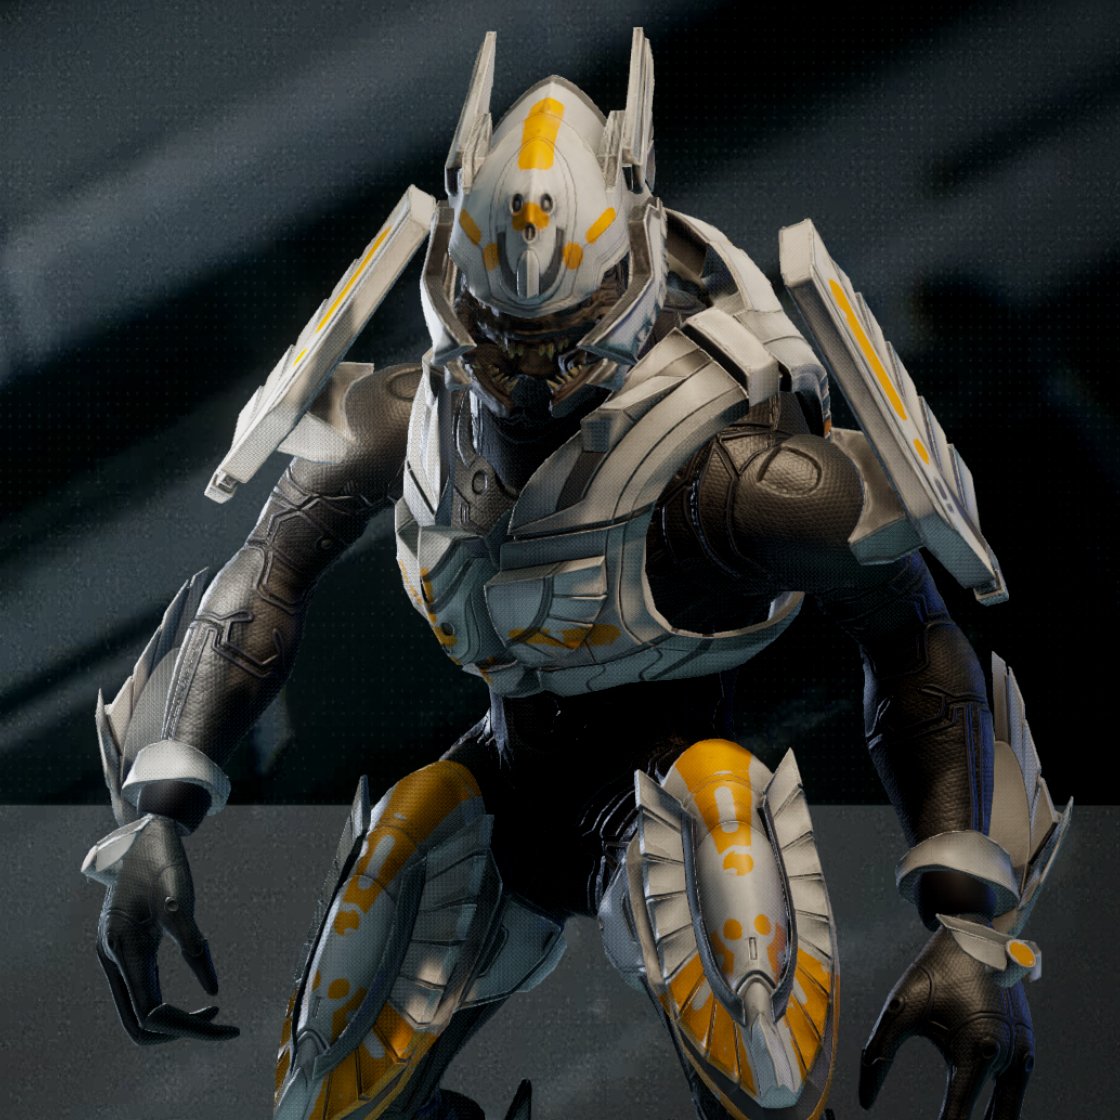 Halo: MCC's next season brings new Elite armors and energy swords.